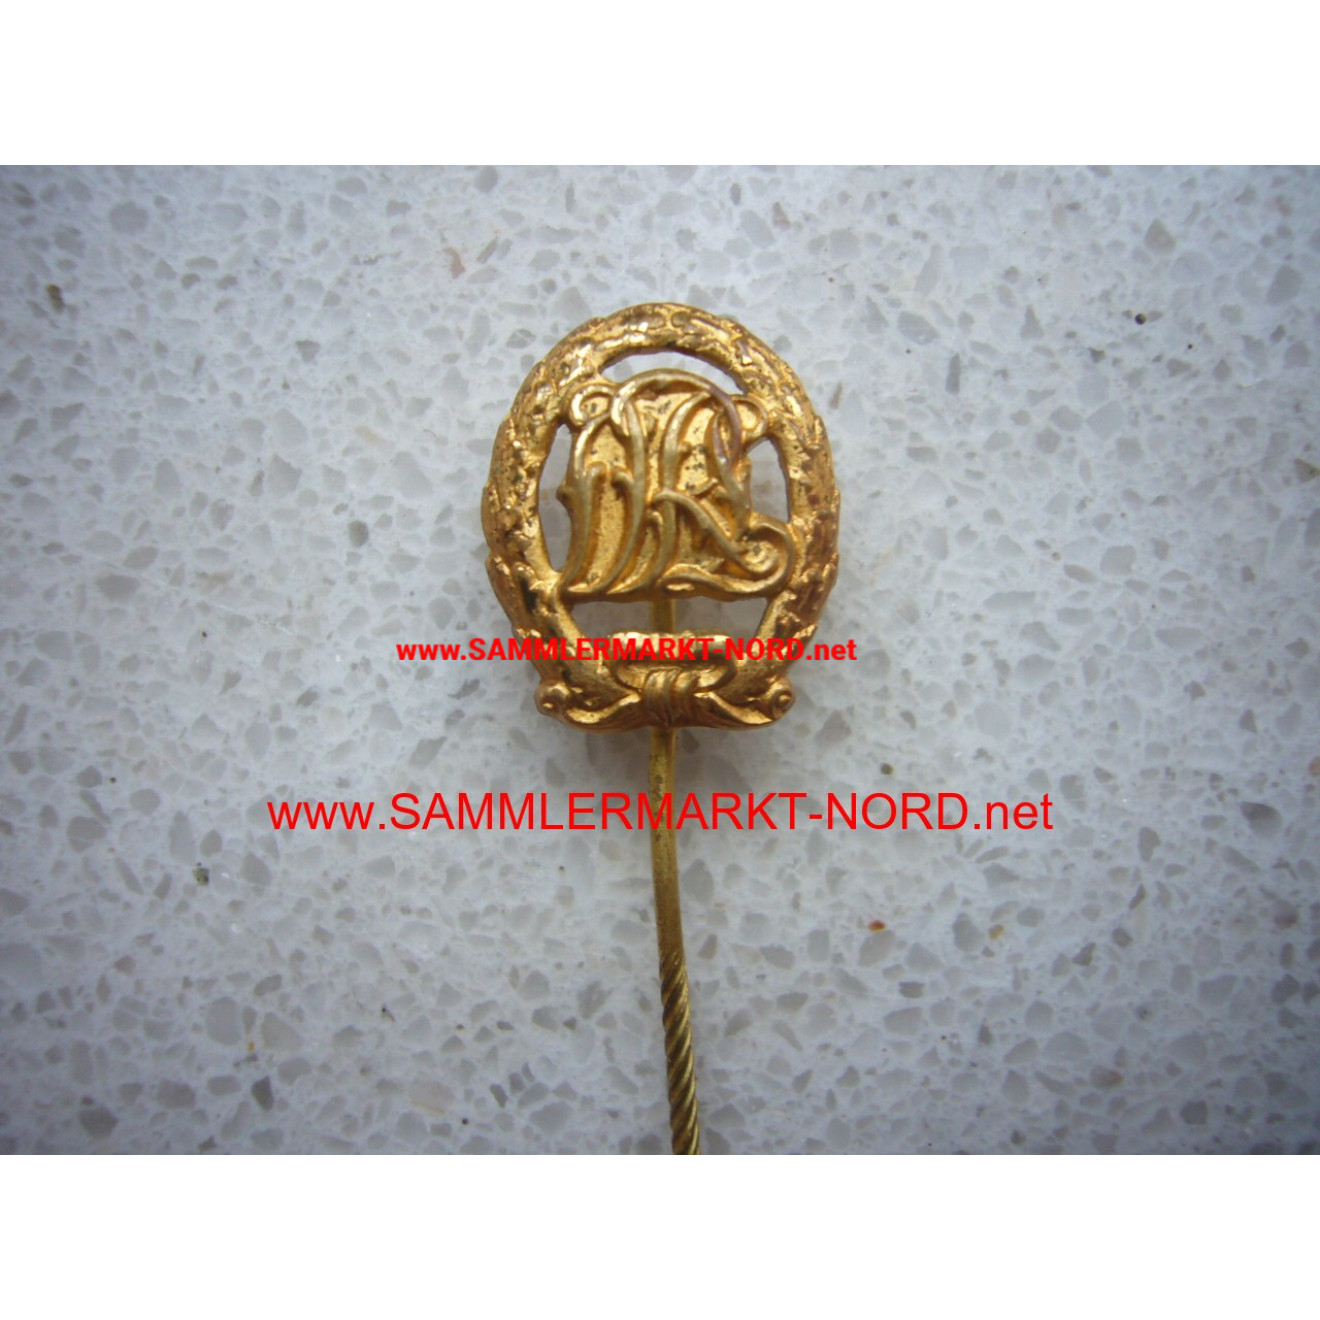 DRA Sports Badge in Gold - Miniature